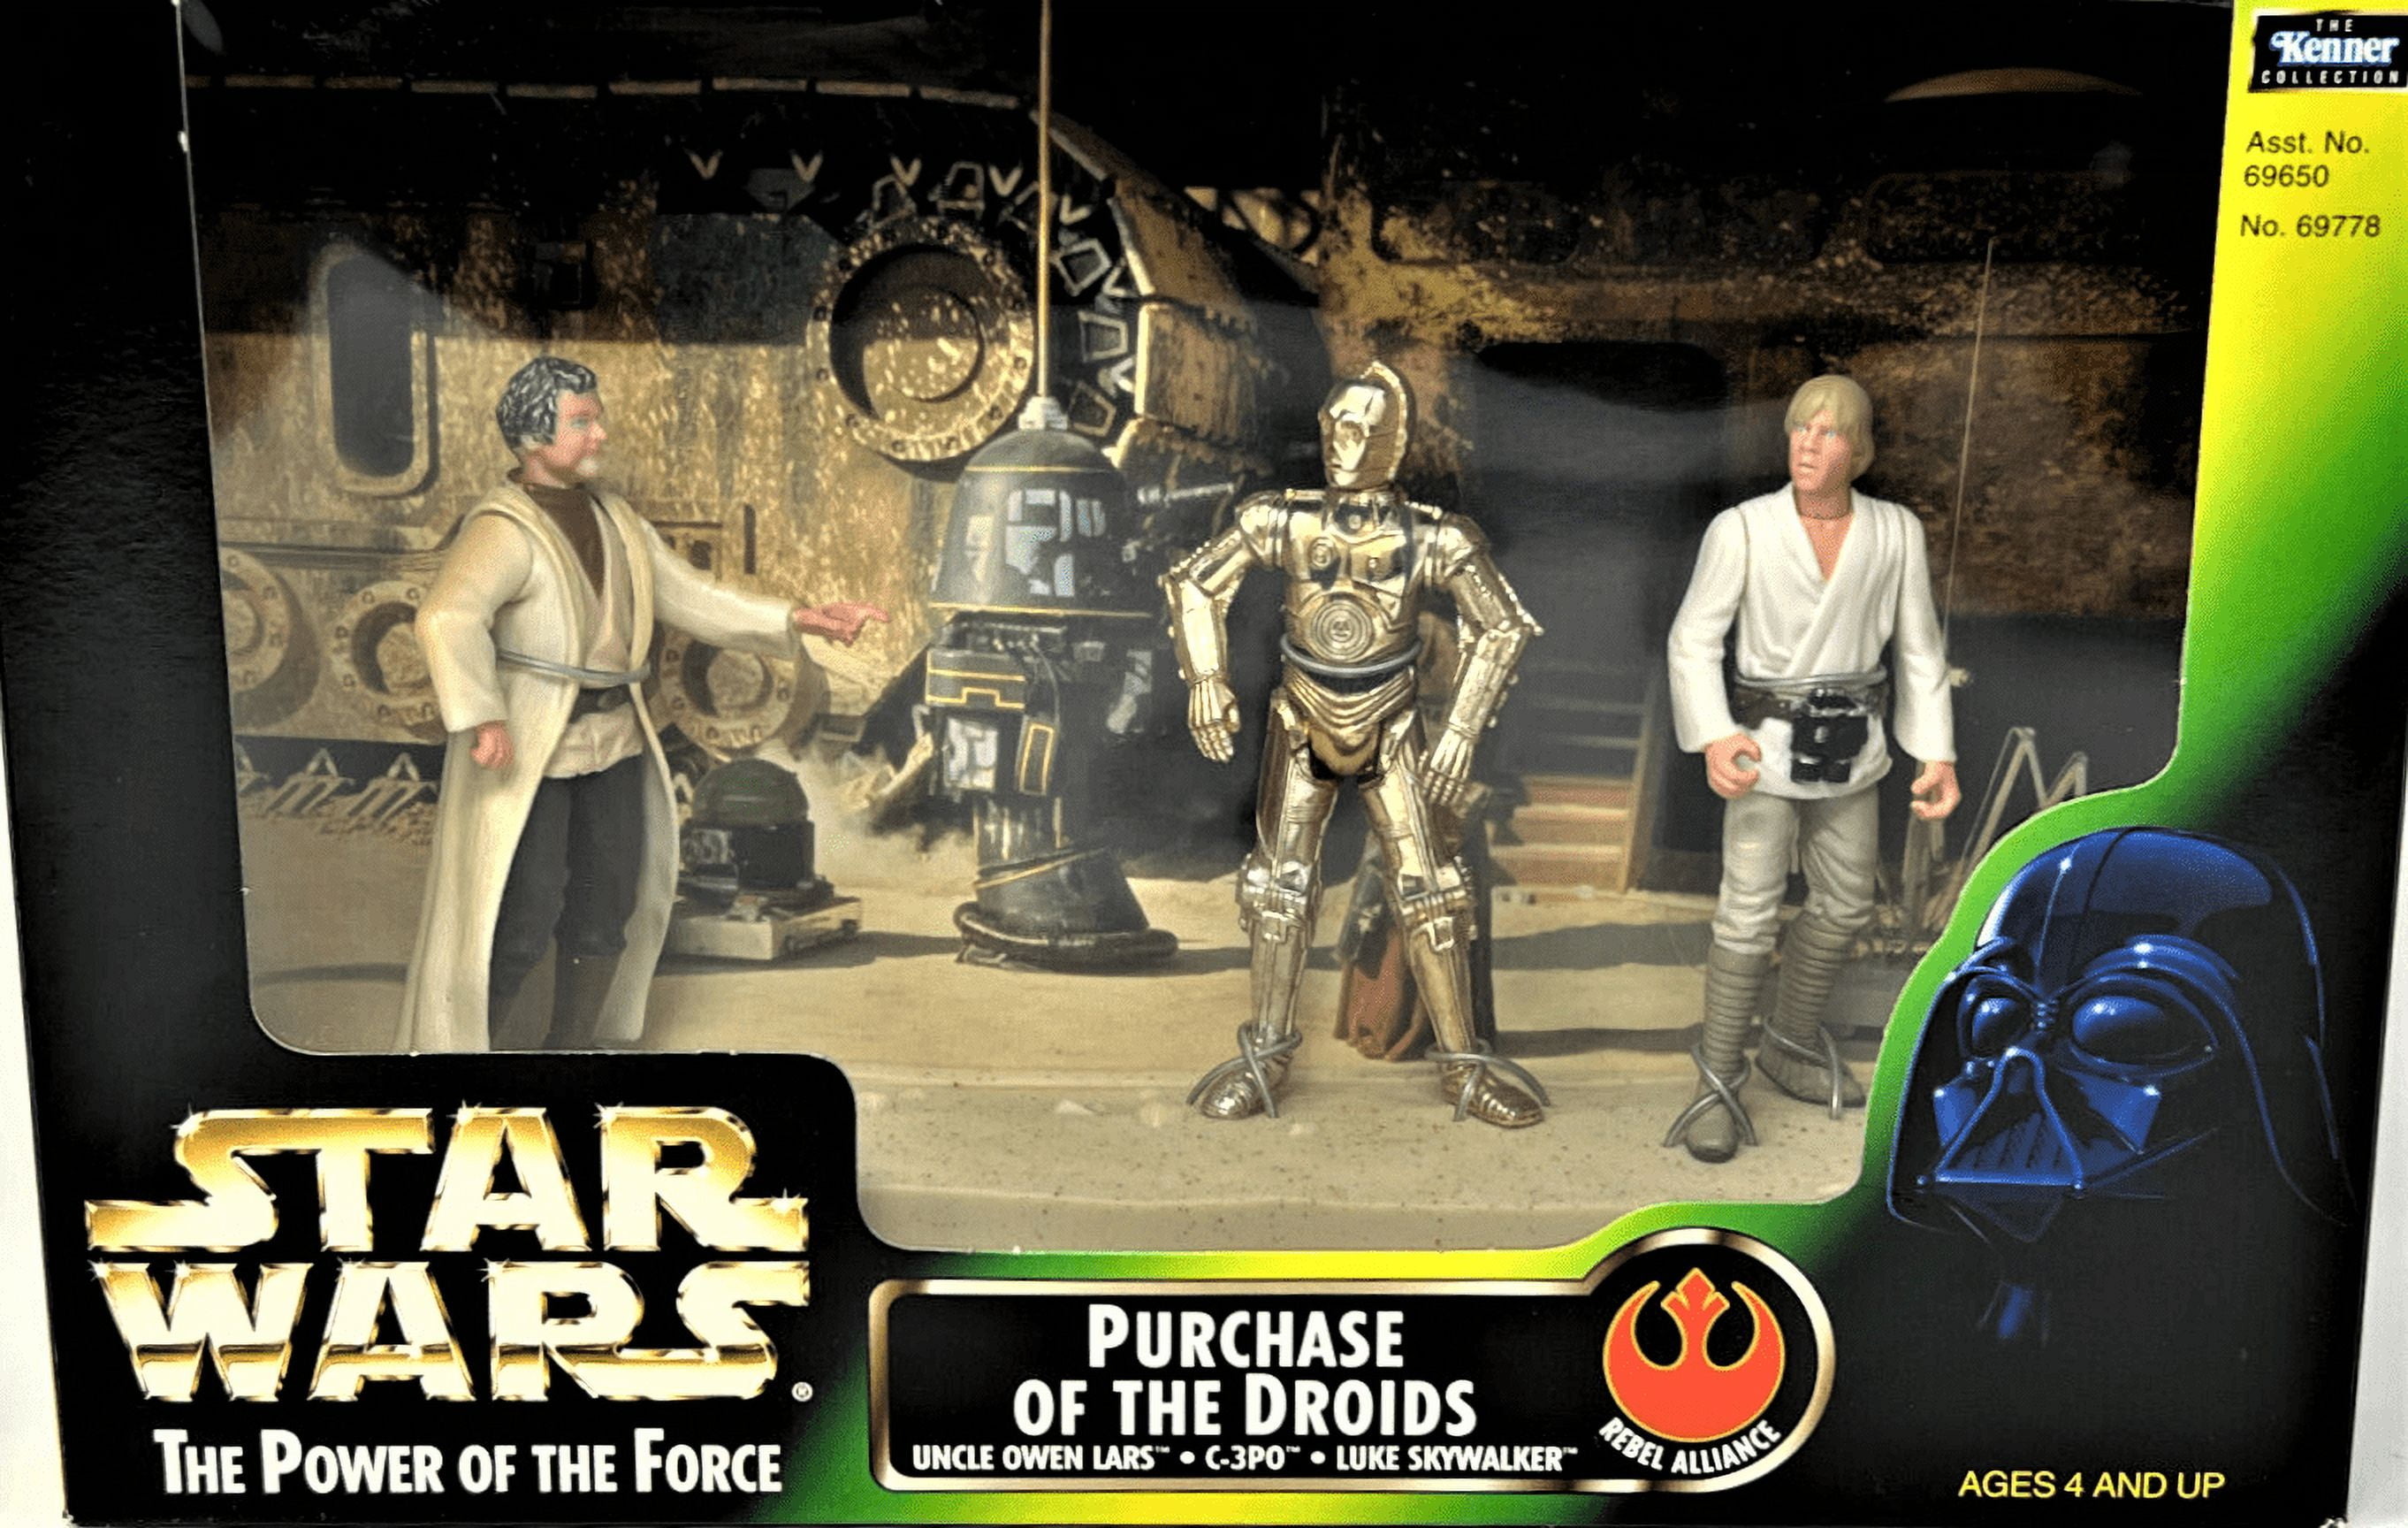 Star Wars Felpudo Star Wars (All Droids Welcome) STAR WARS19,95 €19